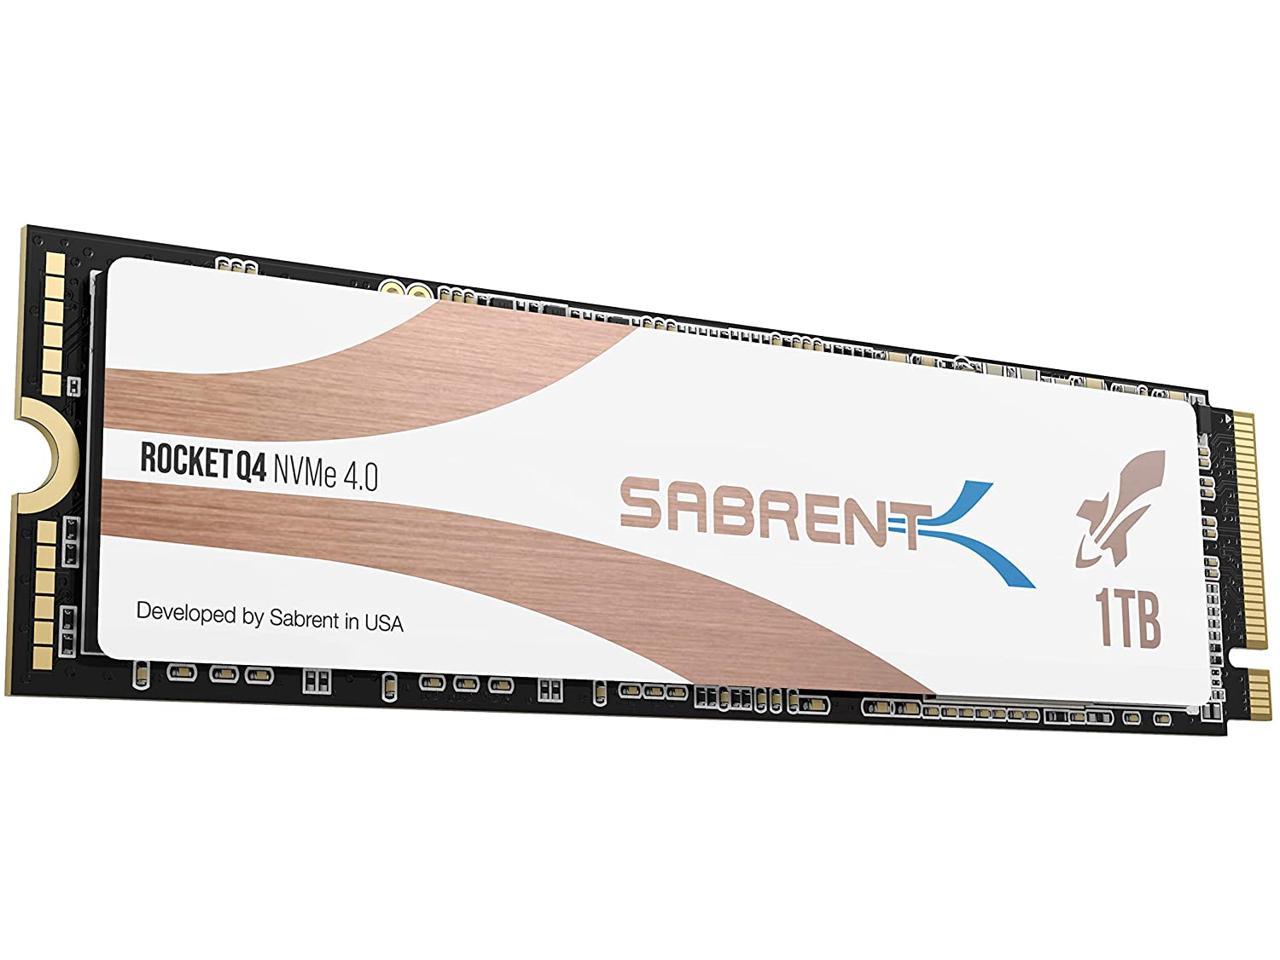 1TB Sabrent Rocket Q4 NVMe SSD $93.49